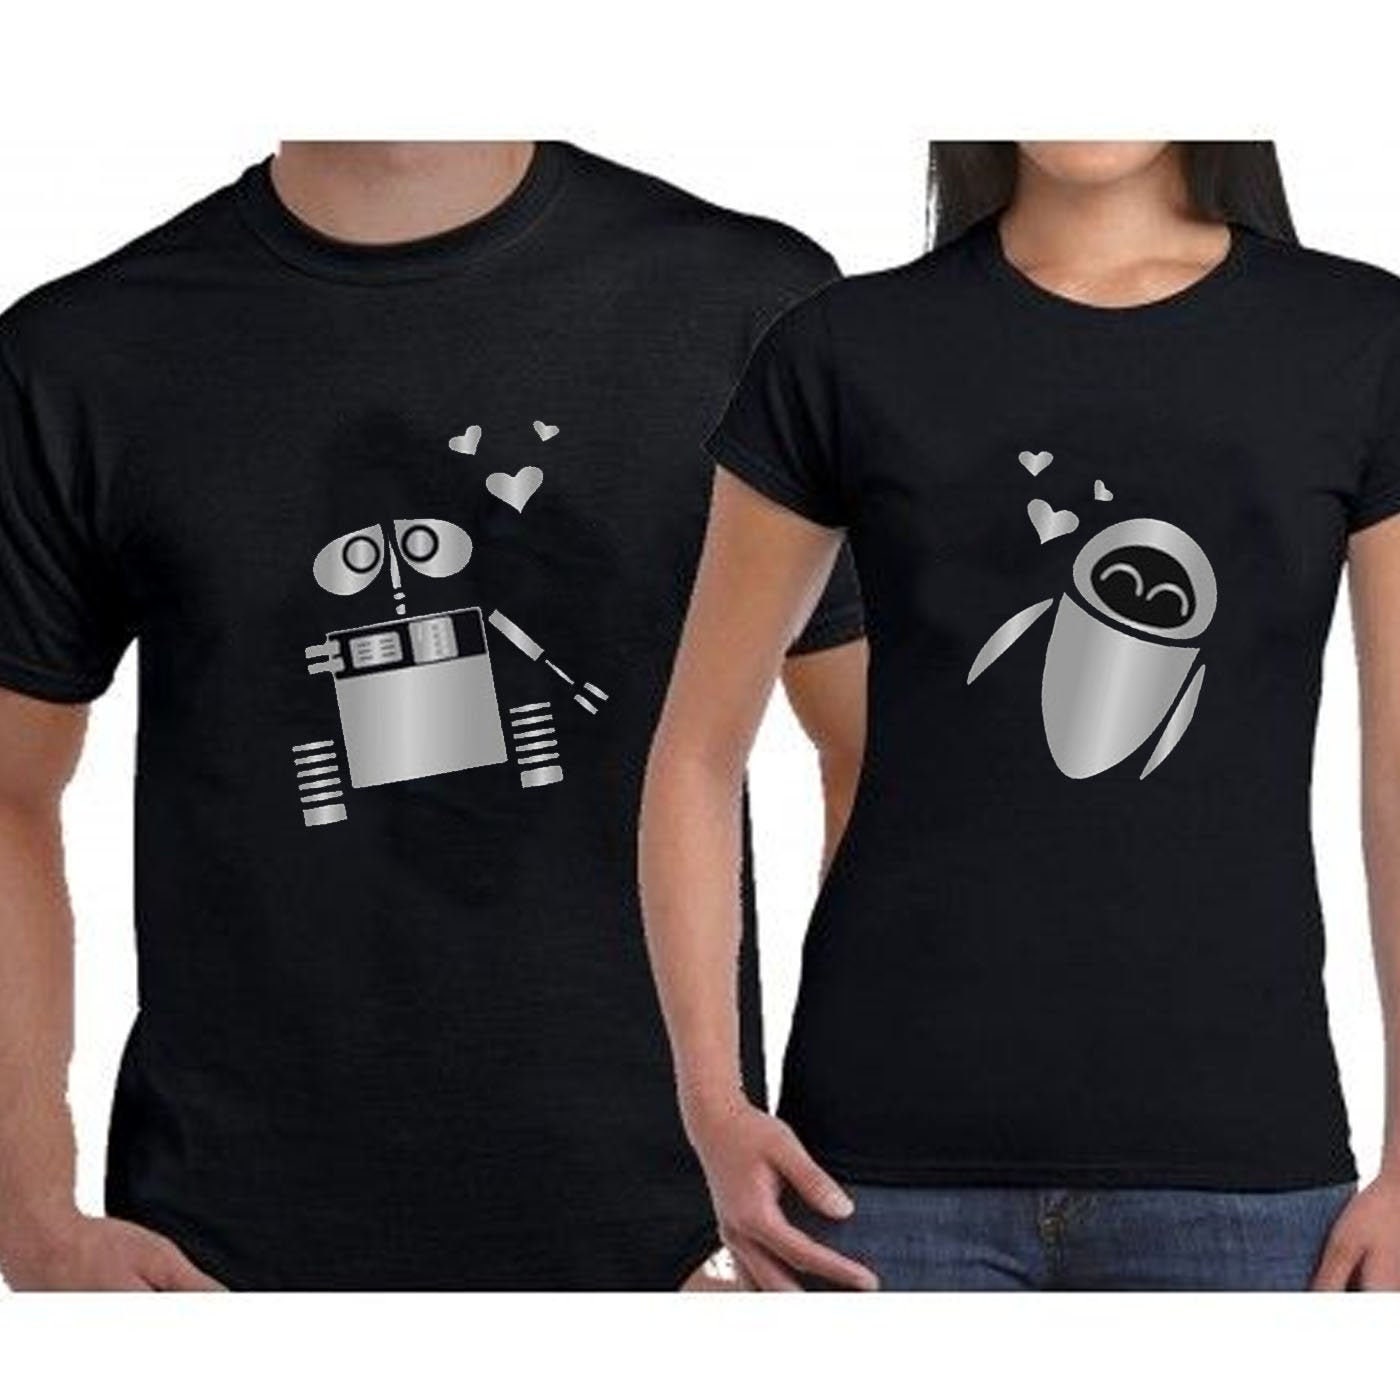 Wall-e and Eva, Matching Love Couples T-shirts, Couples Shirts ...